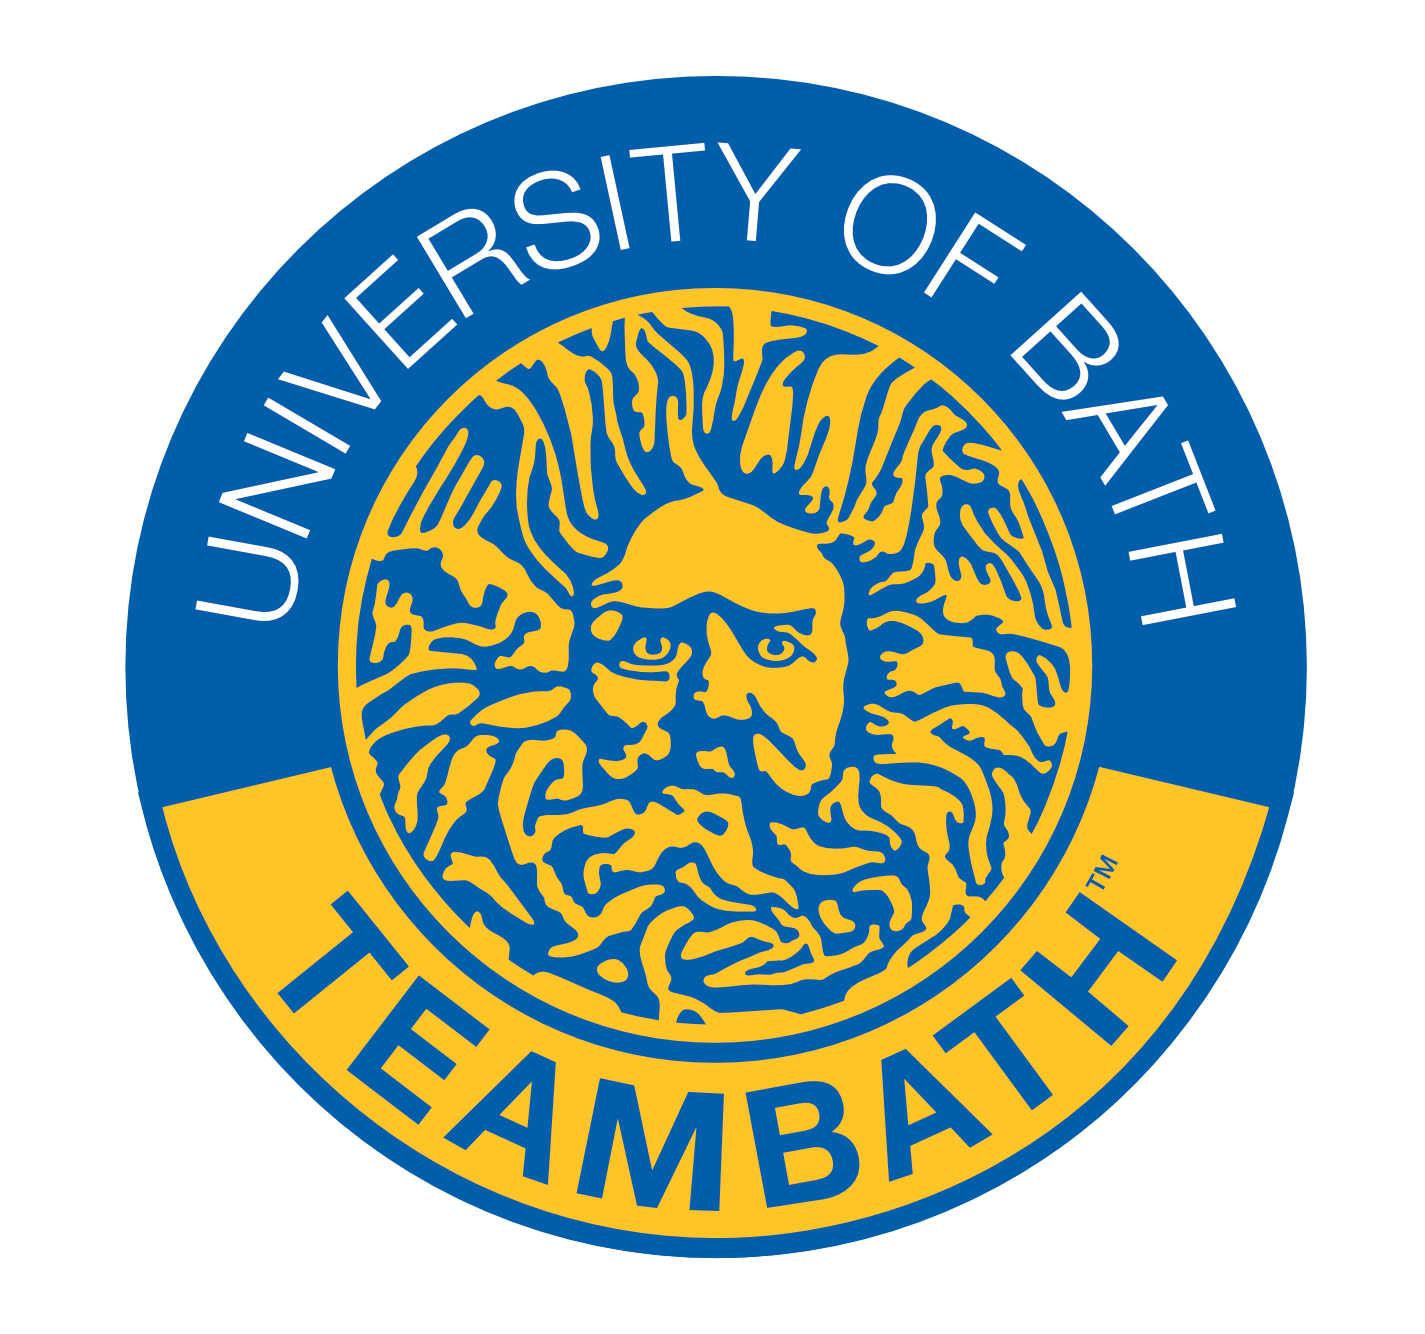 University of Bath - Team Bath Yellow and Blue Logo